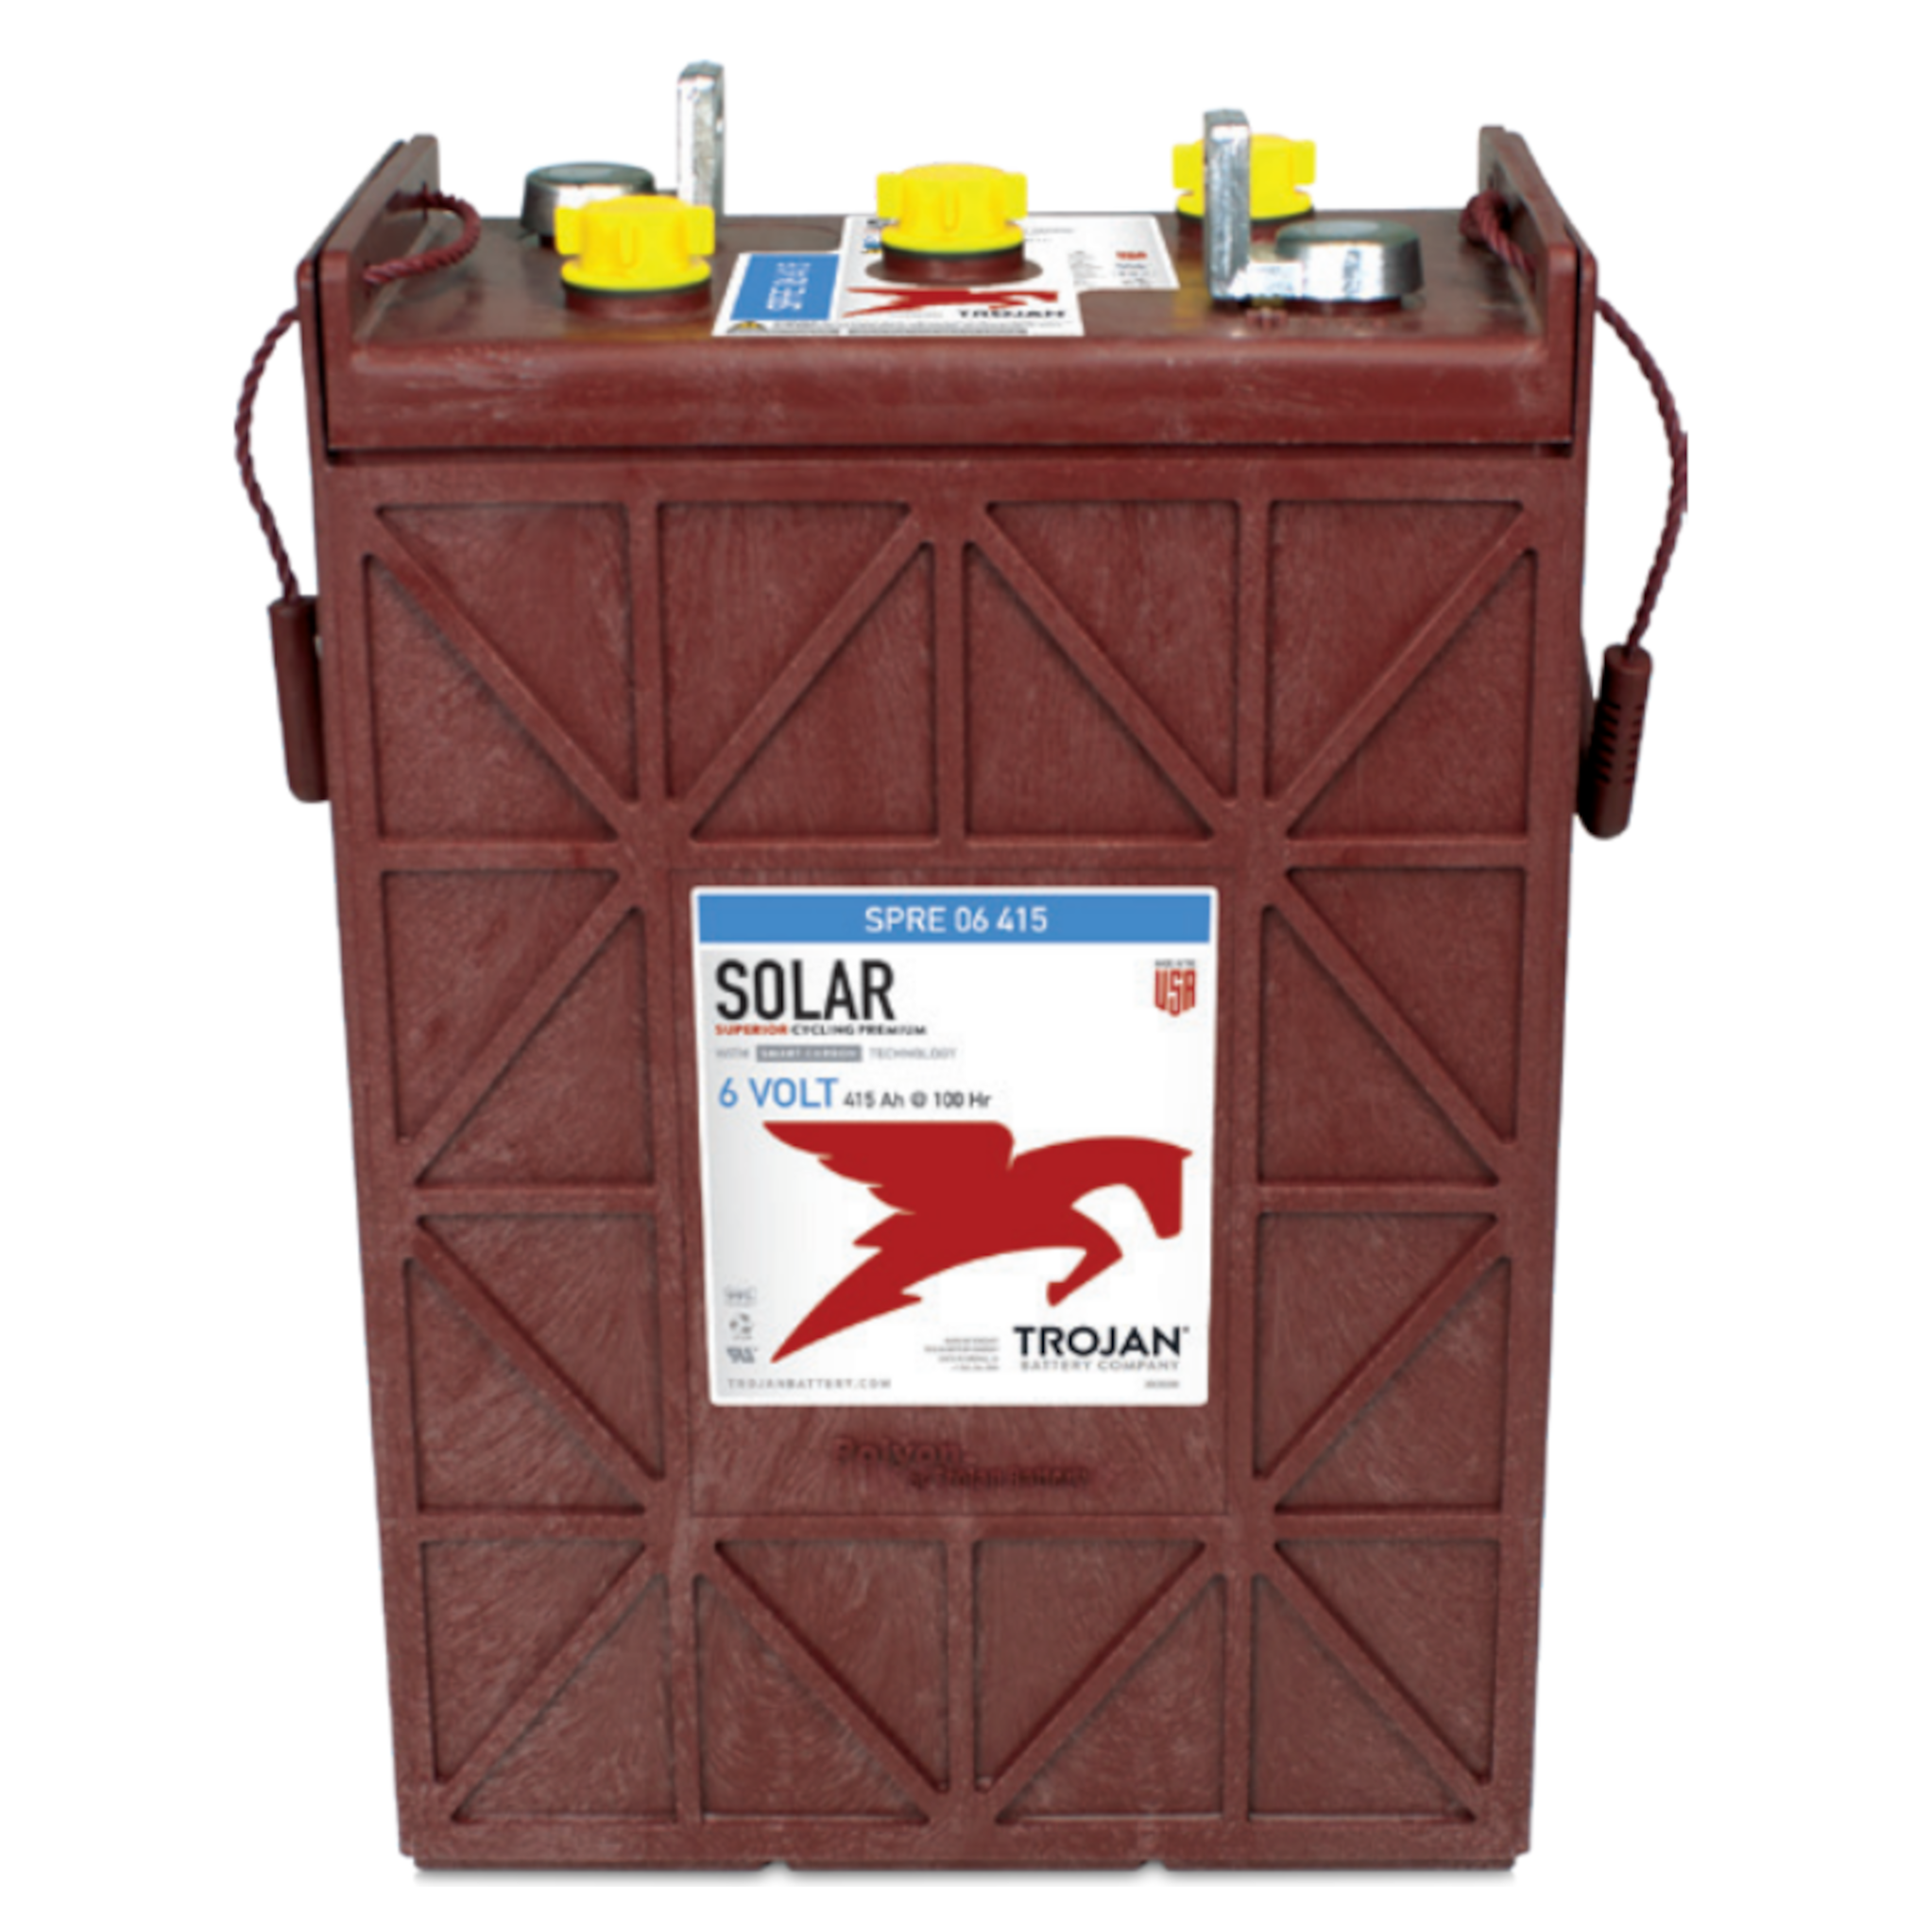 Trojan SPRE 06 416 6V Flooded Solar Battery